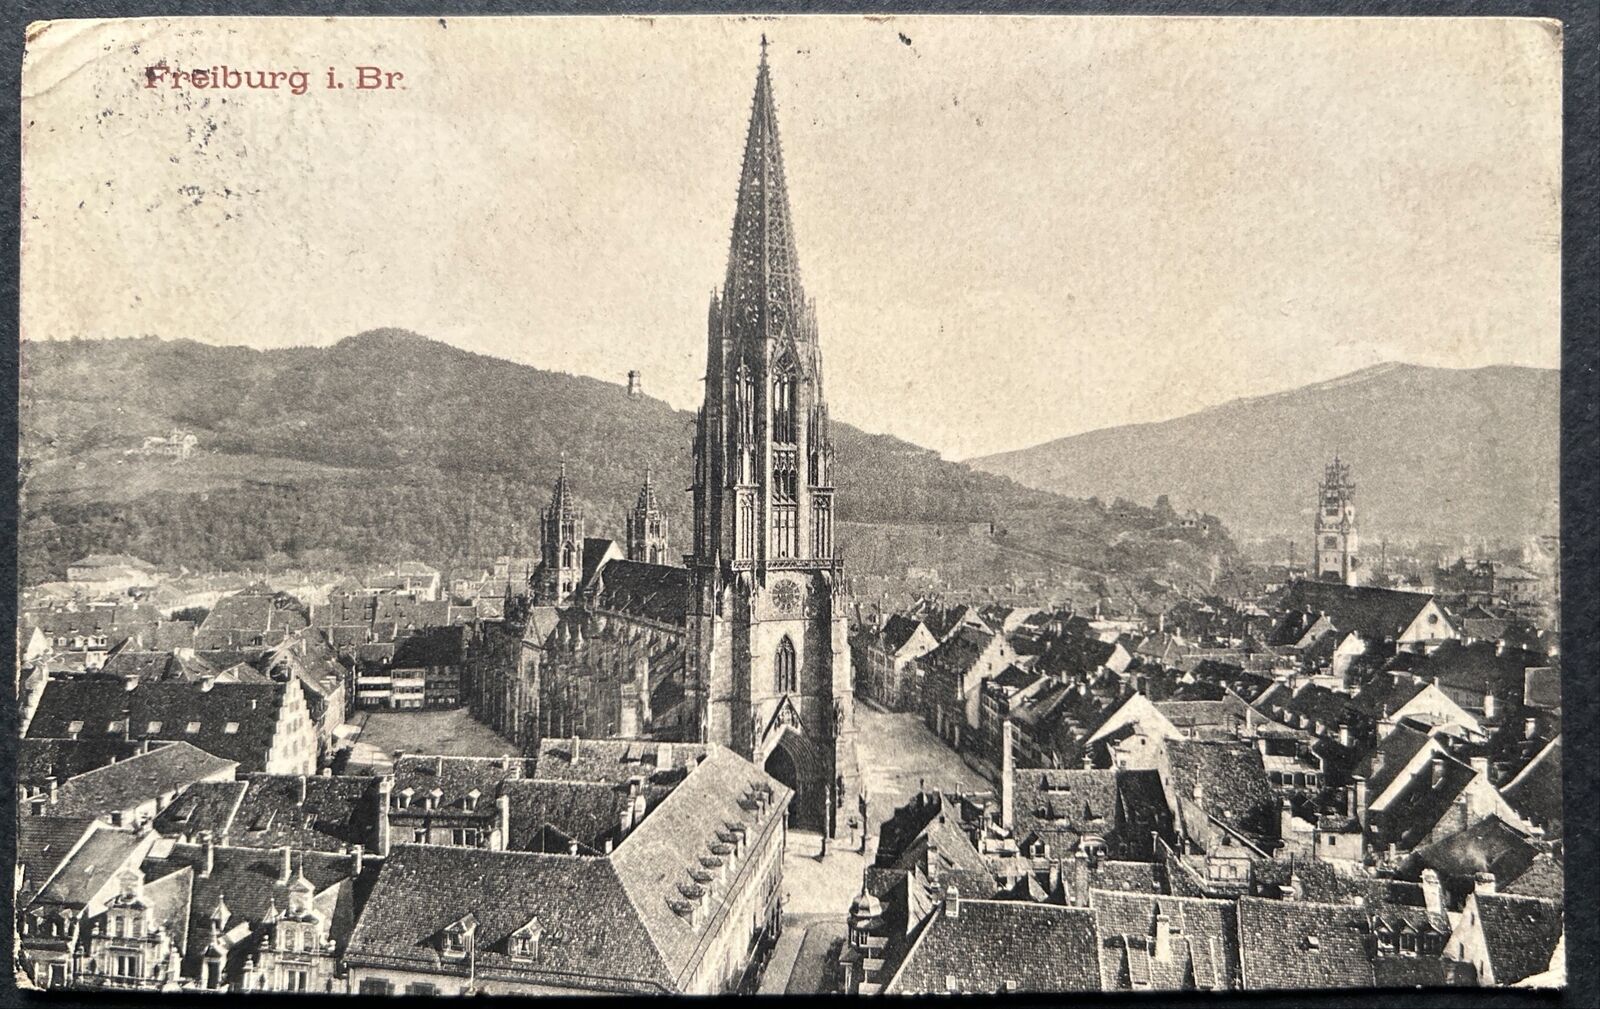 Freiburg im Breisgau, Germany 1912, Cityscape/Cathedral, Posted Freiburg